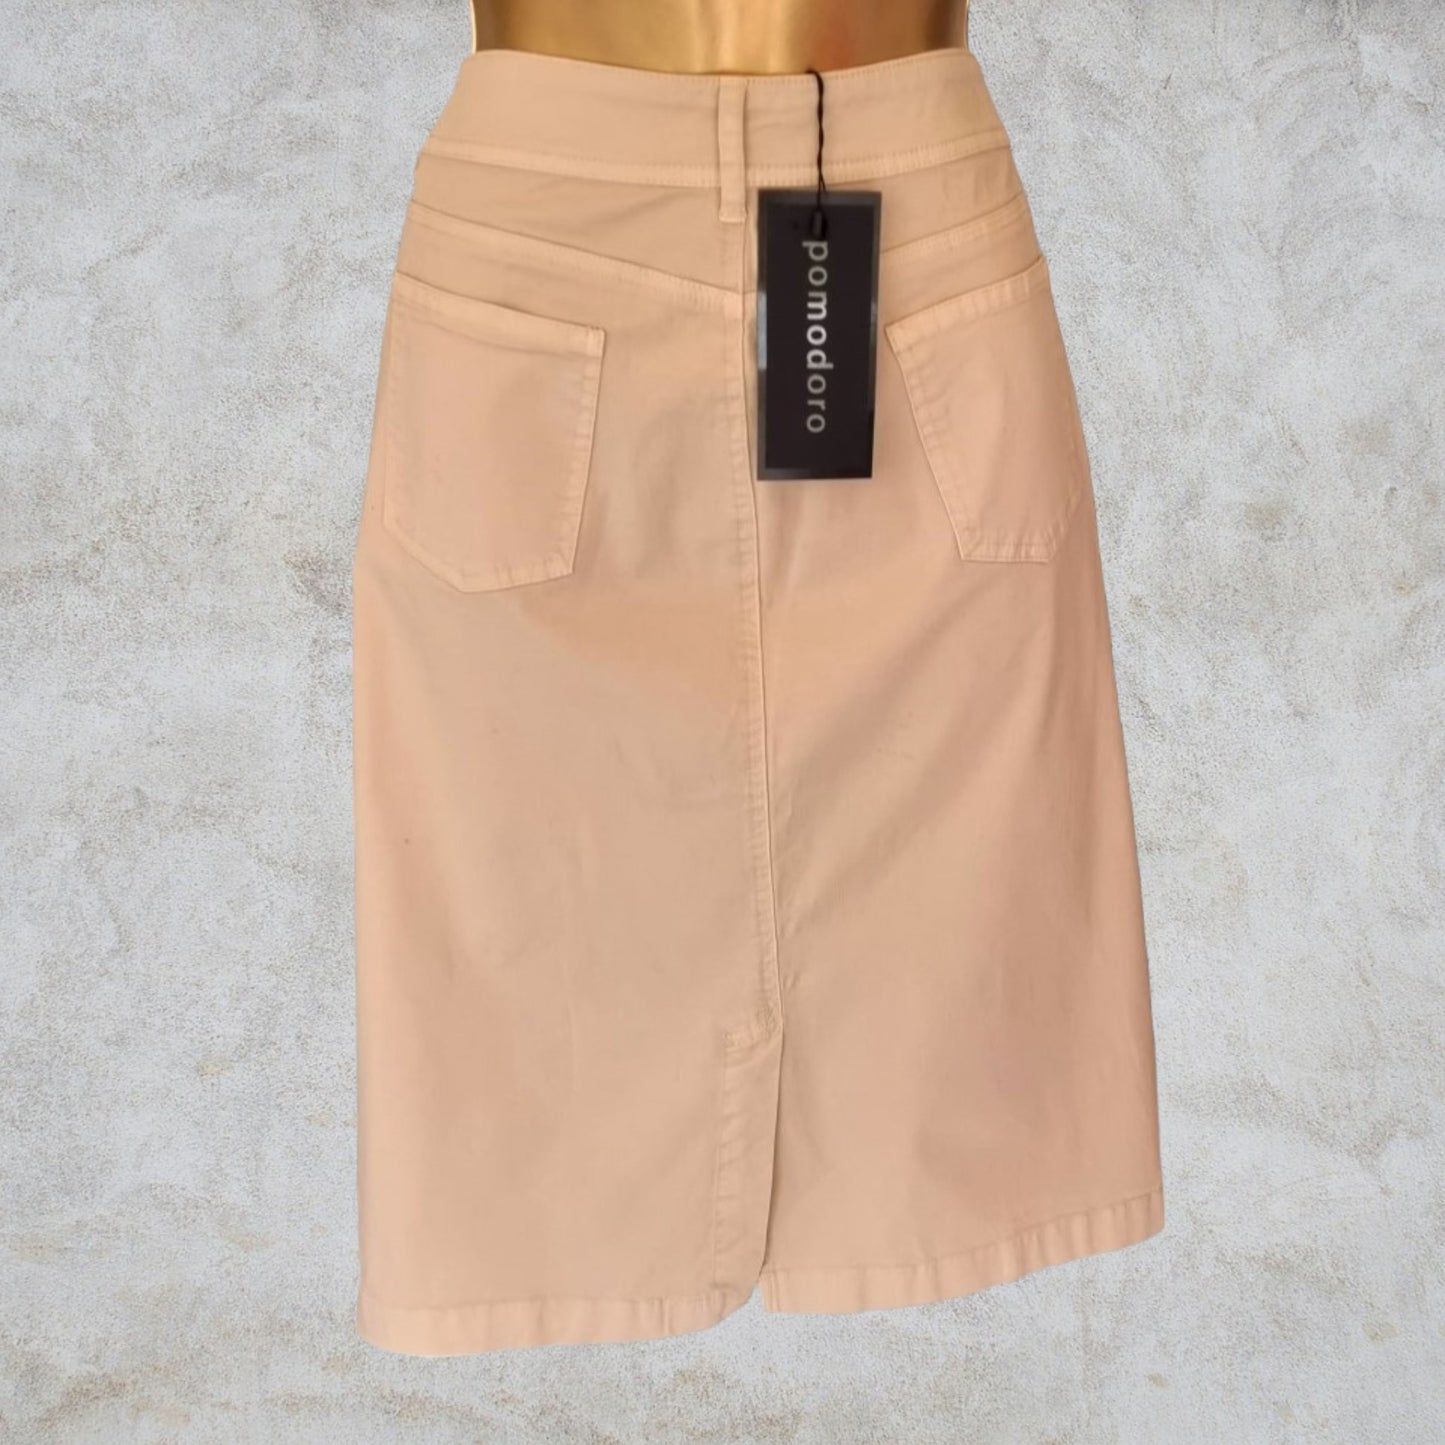 Pomodoro Womens Stone Stretch Cotton Skirt UK 10 EU 38 US 6 Timeless Fashions